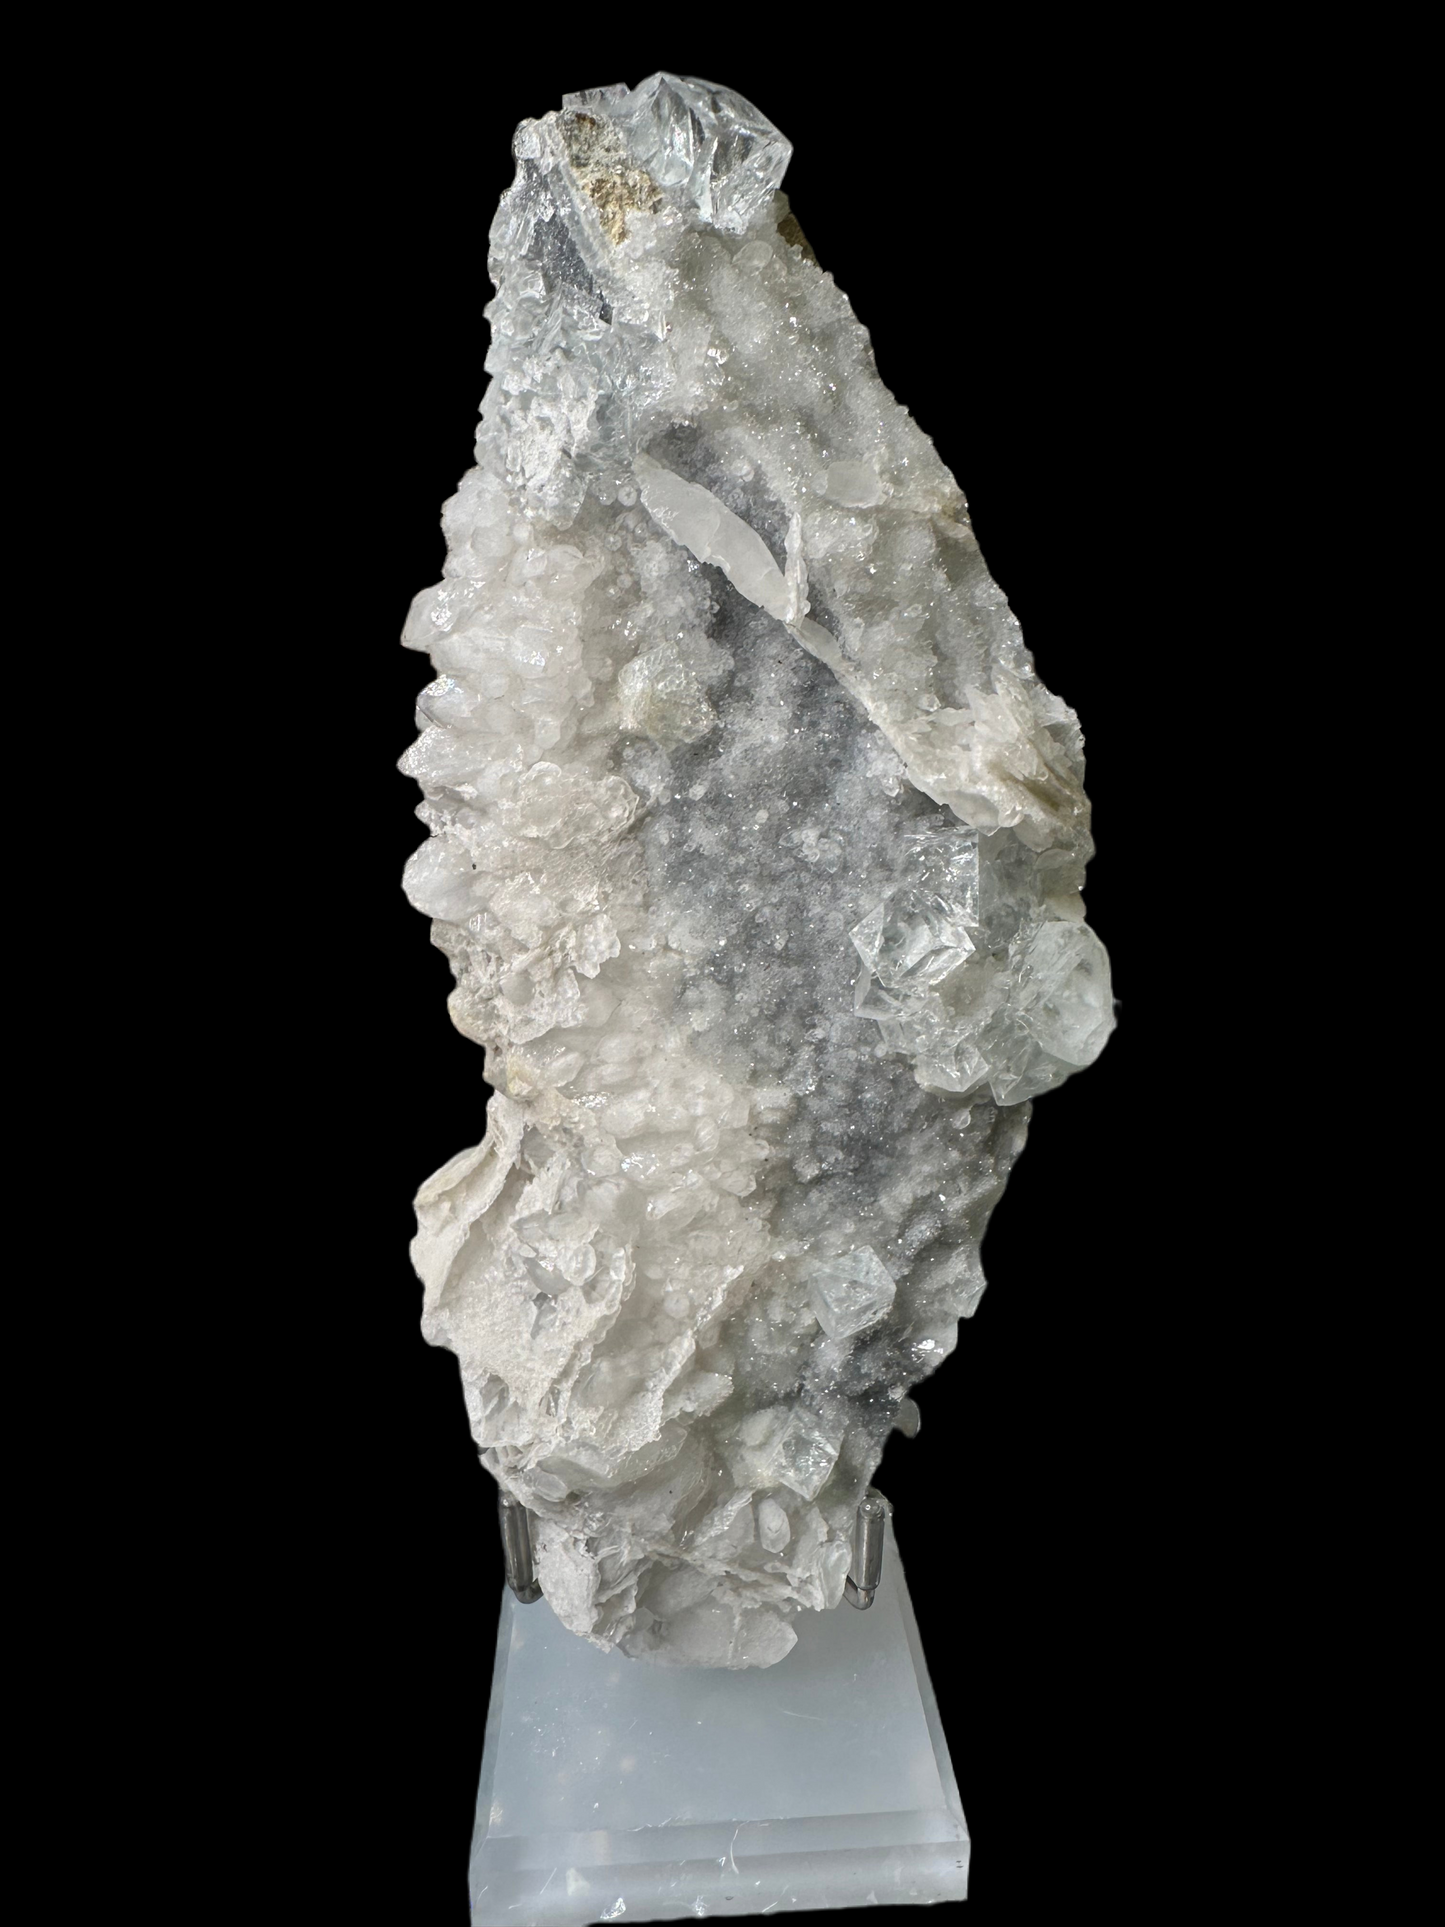 Ygx Fluorite with Calcite